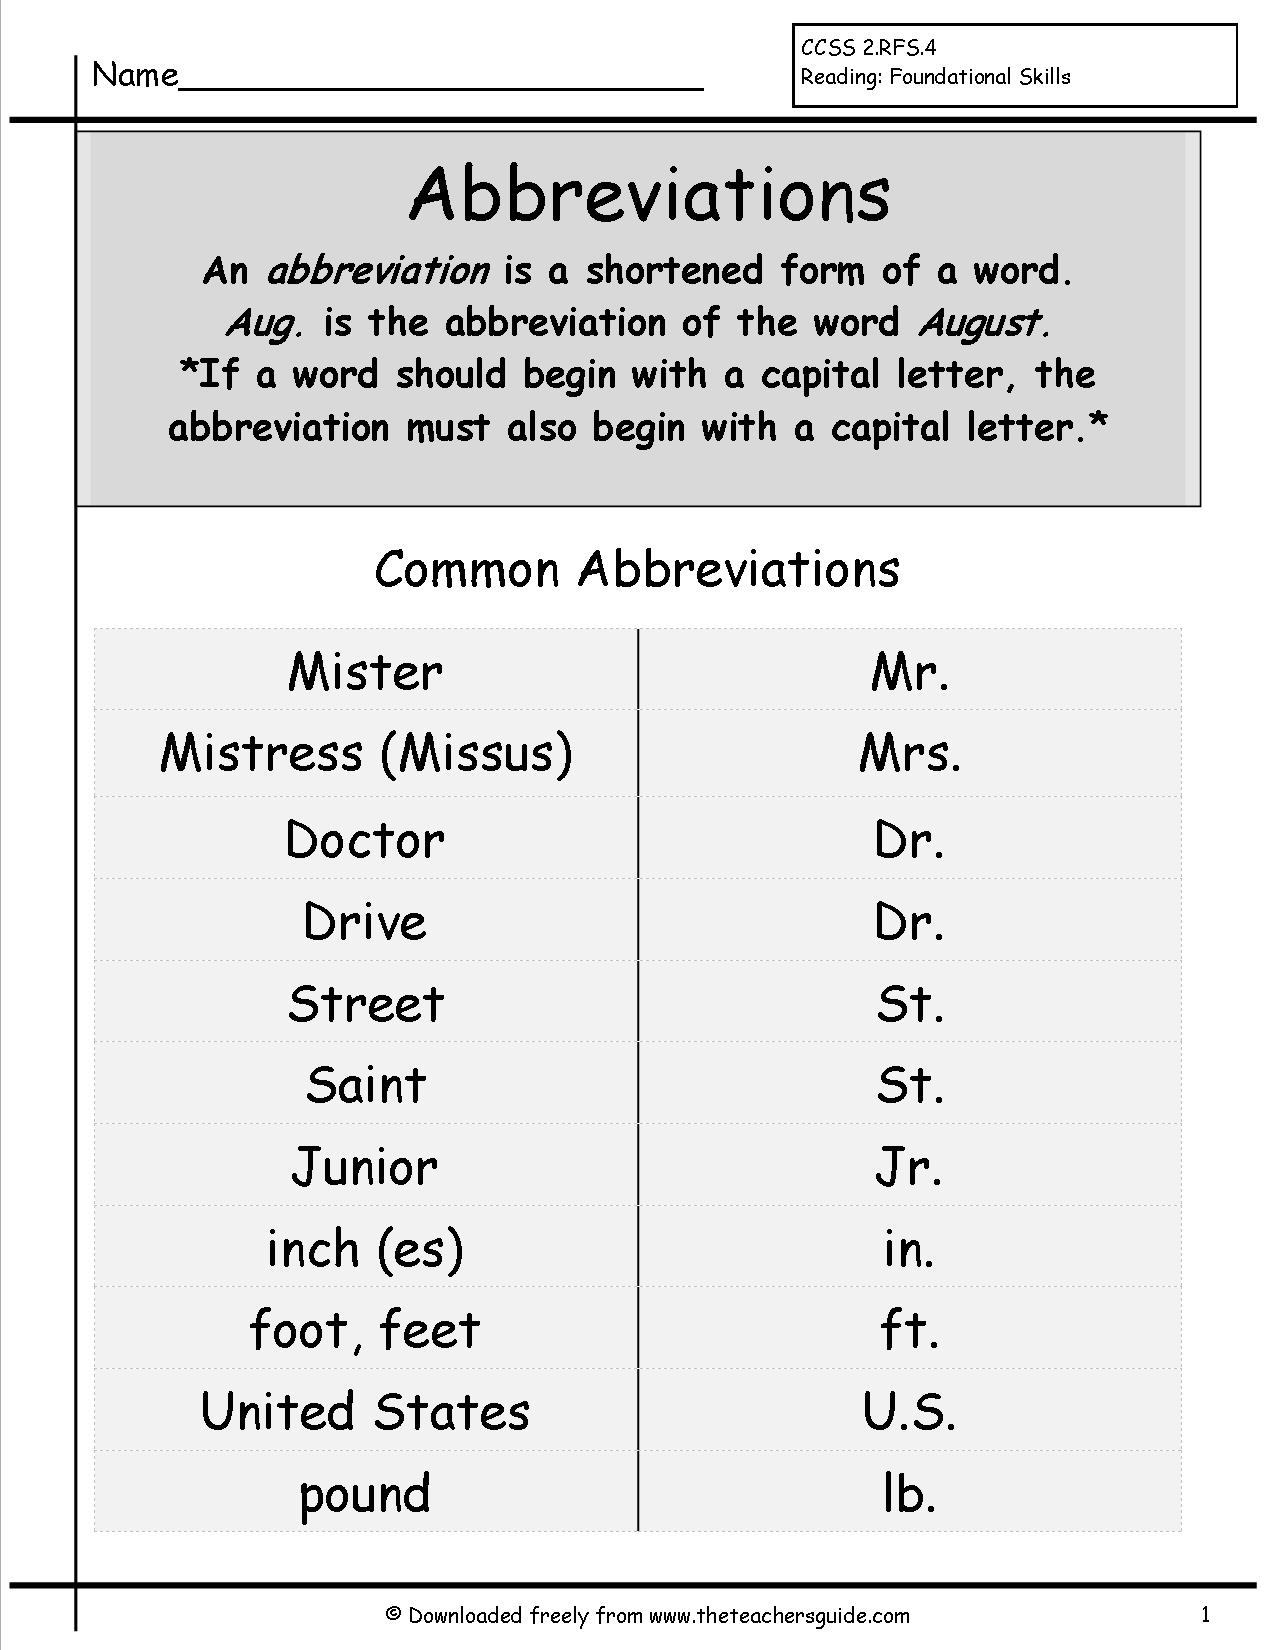 assignment word abbreviation